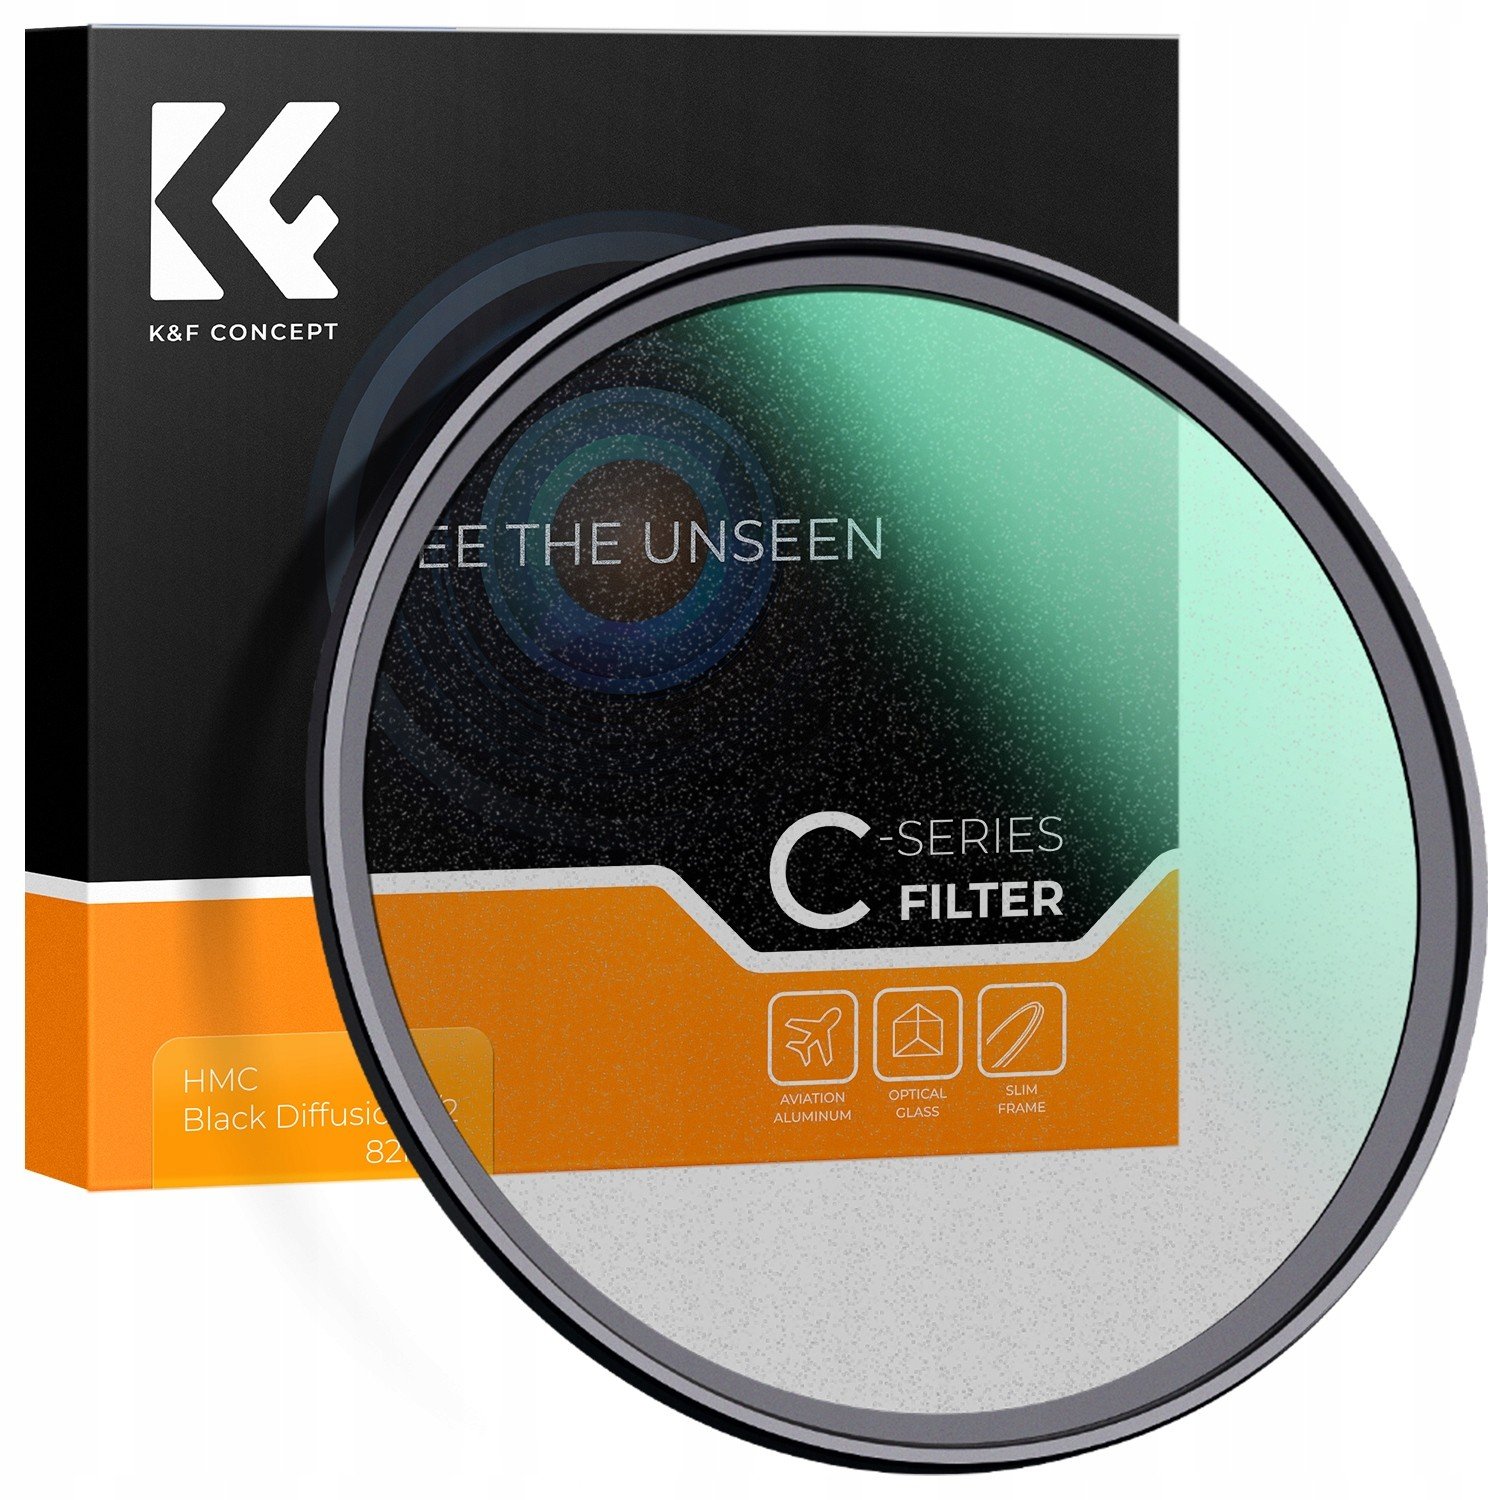 Difuzní filtr Black Mist 1/2 62mm Nano-C K&f